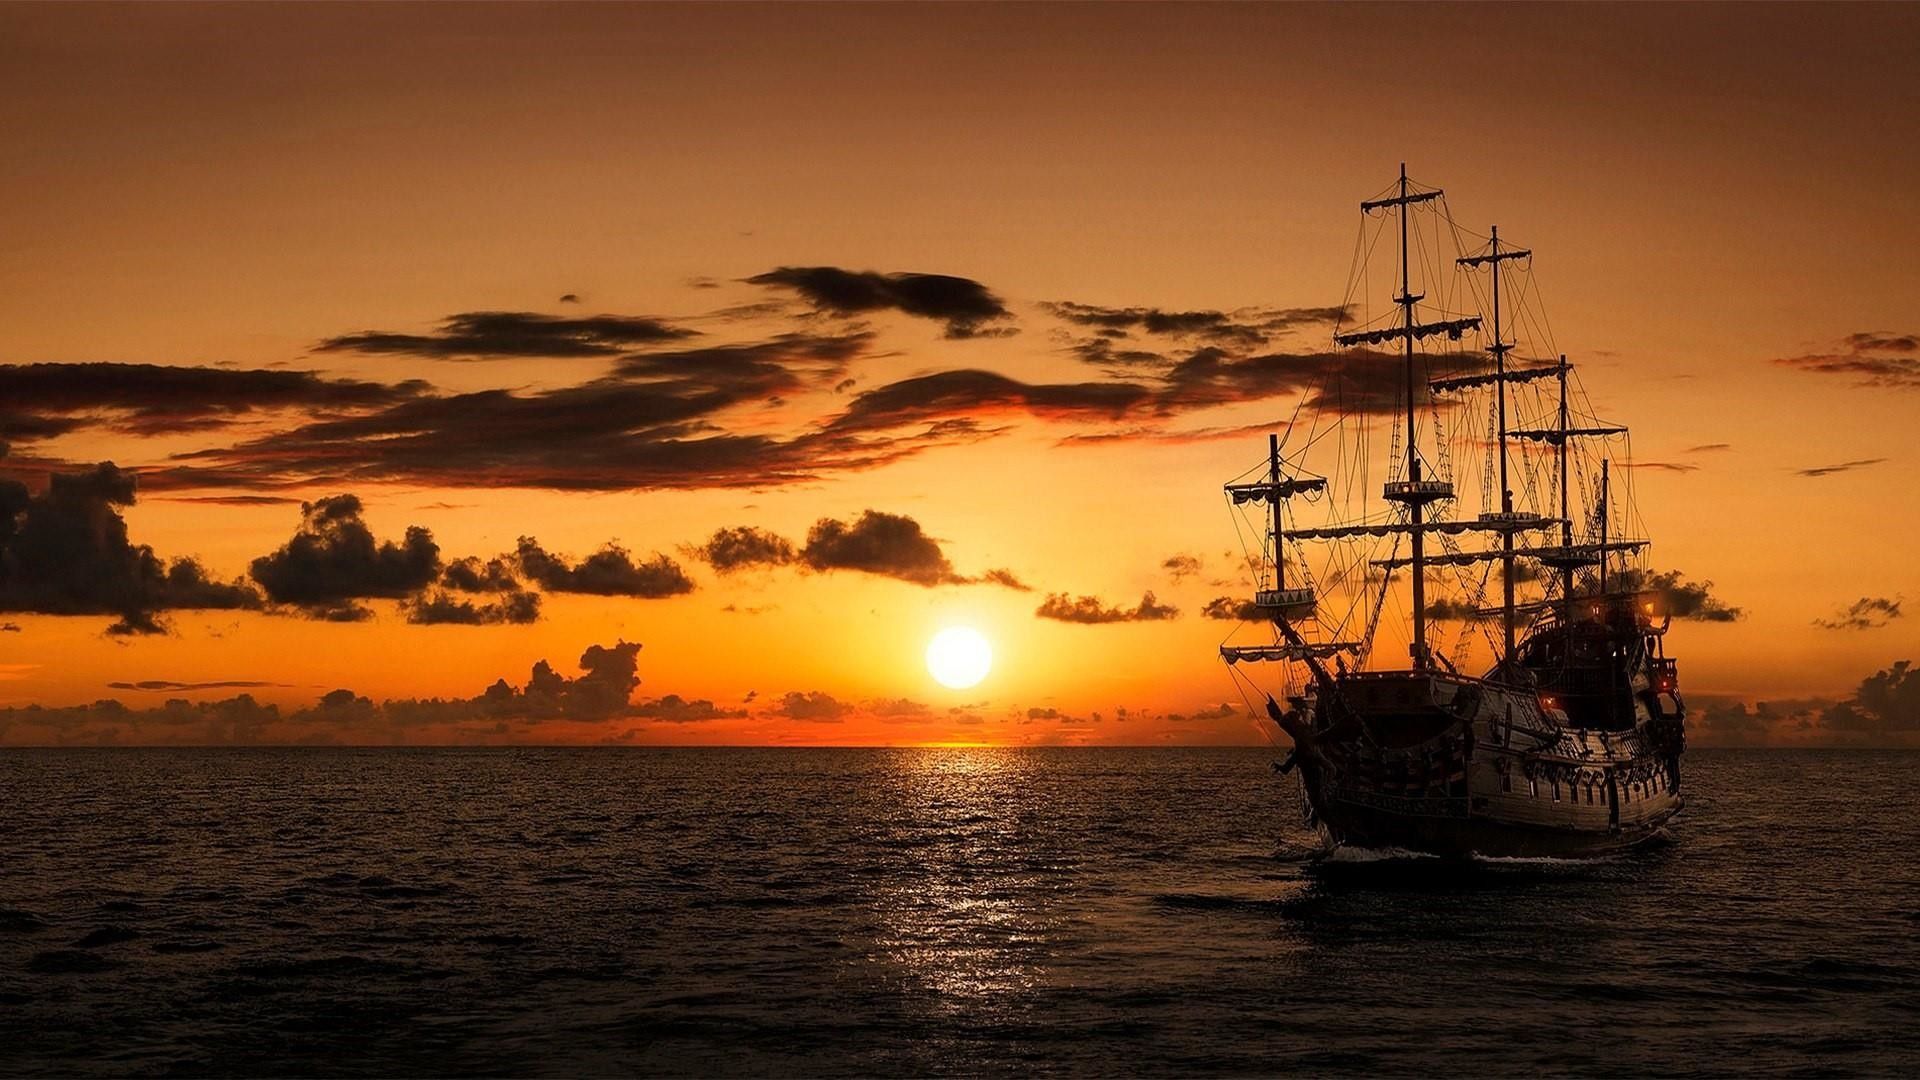 Pirate Ship Wallpaper